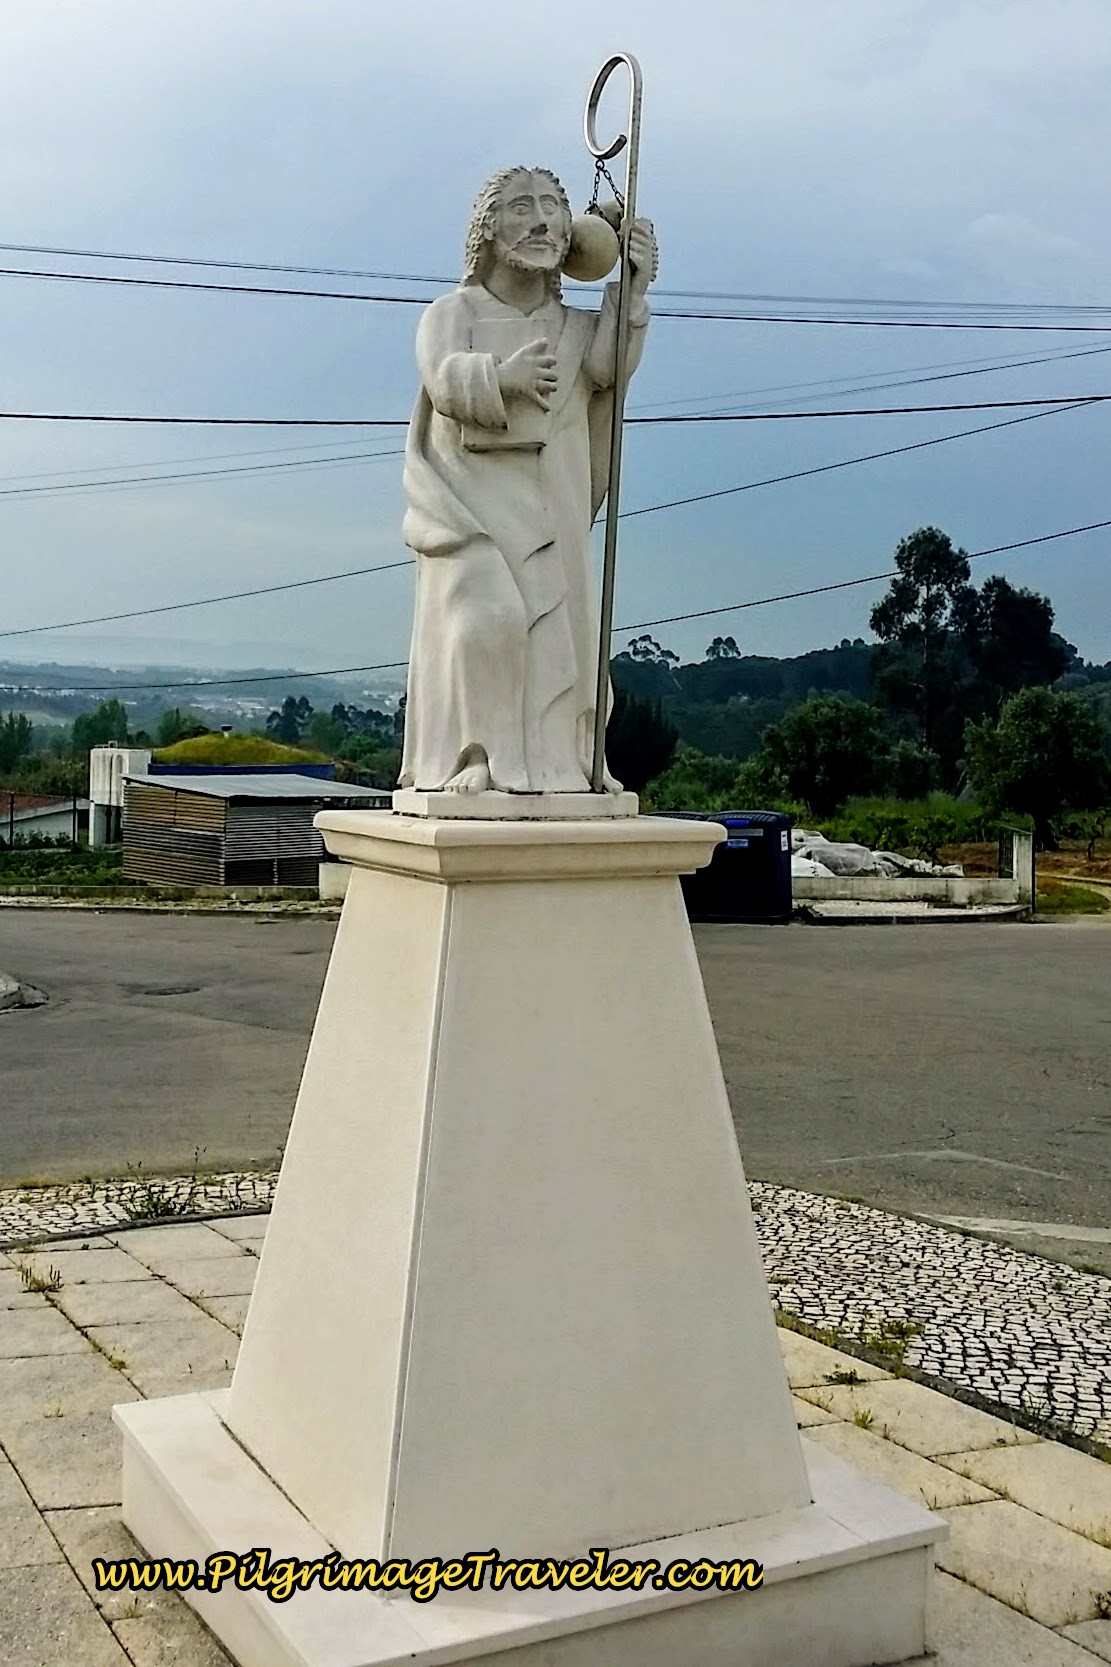 Pilgrim Statue in the Largo da Igreja, Trouxemil, Portugal